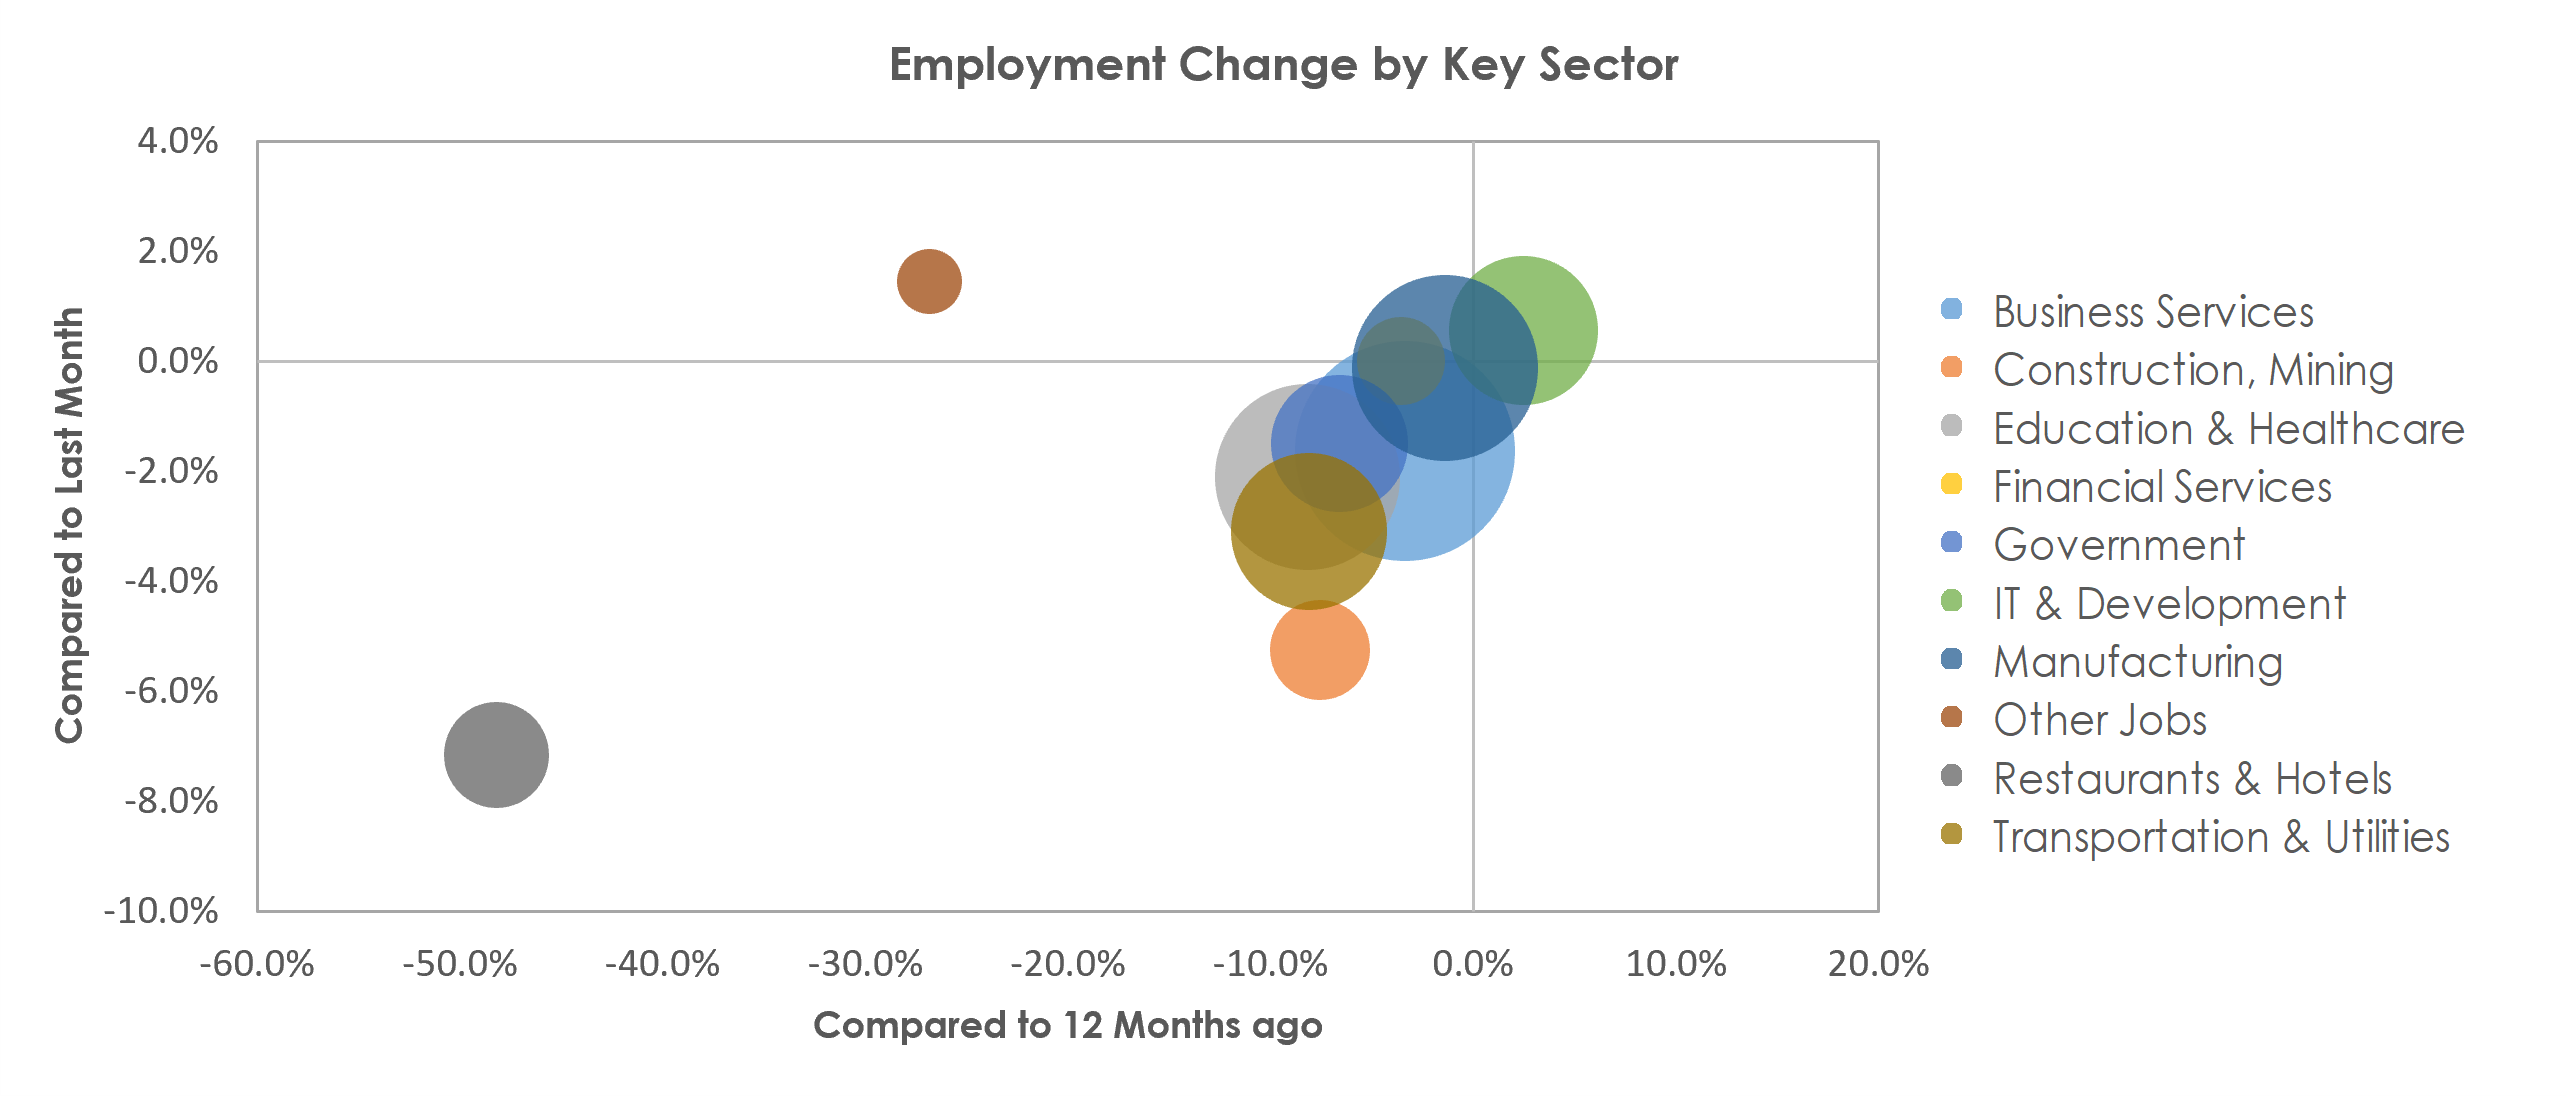 San Jose-Sunnyvale-Santa Clara, CA Unemployment by Industry January 2021